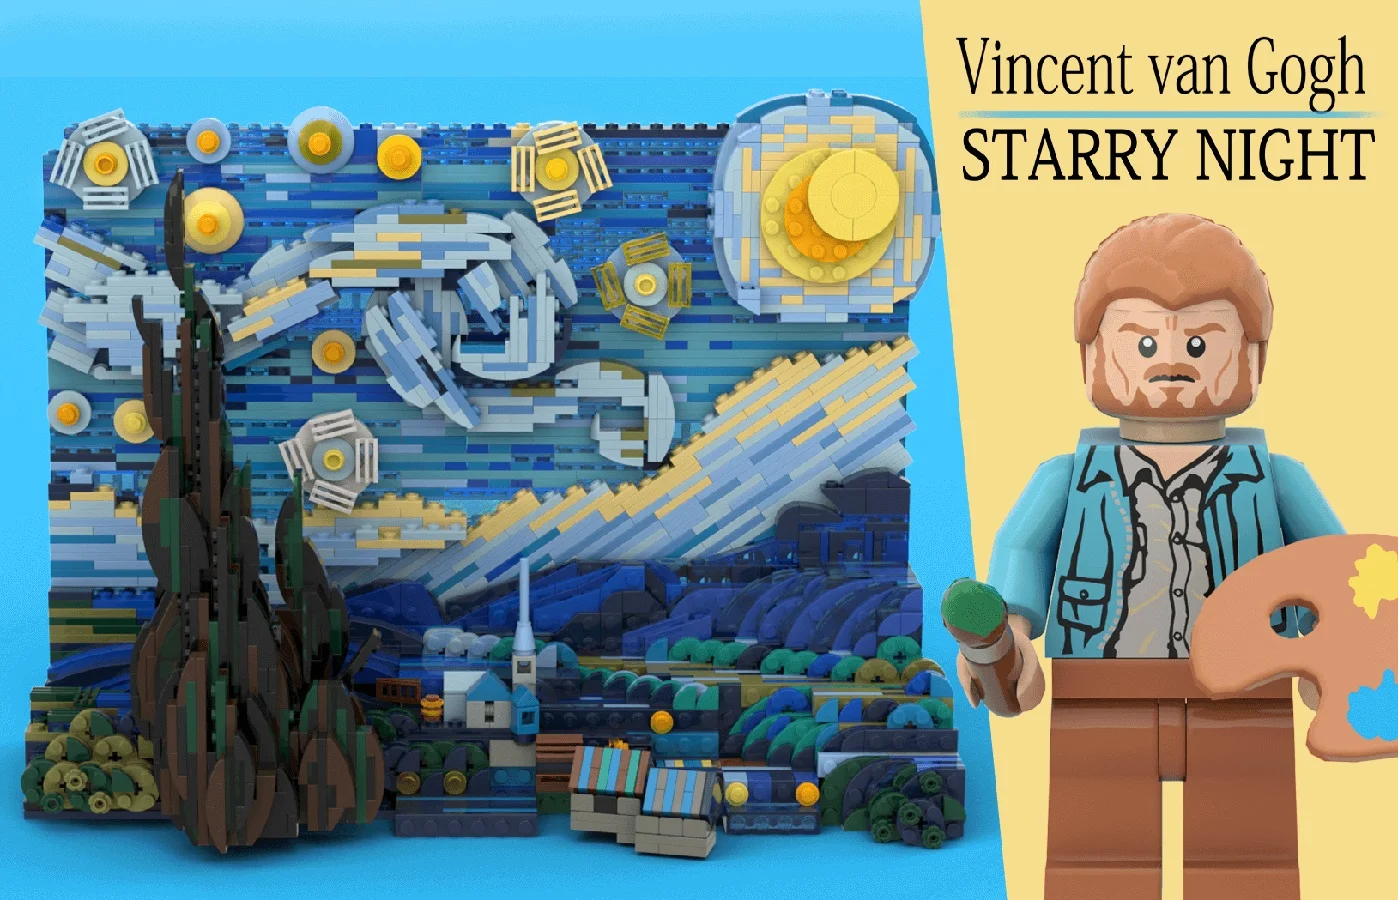 23\. Vincent van Gogh: The Starry Night